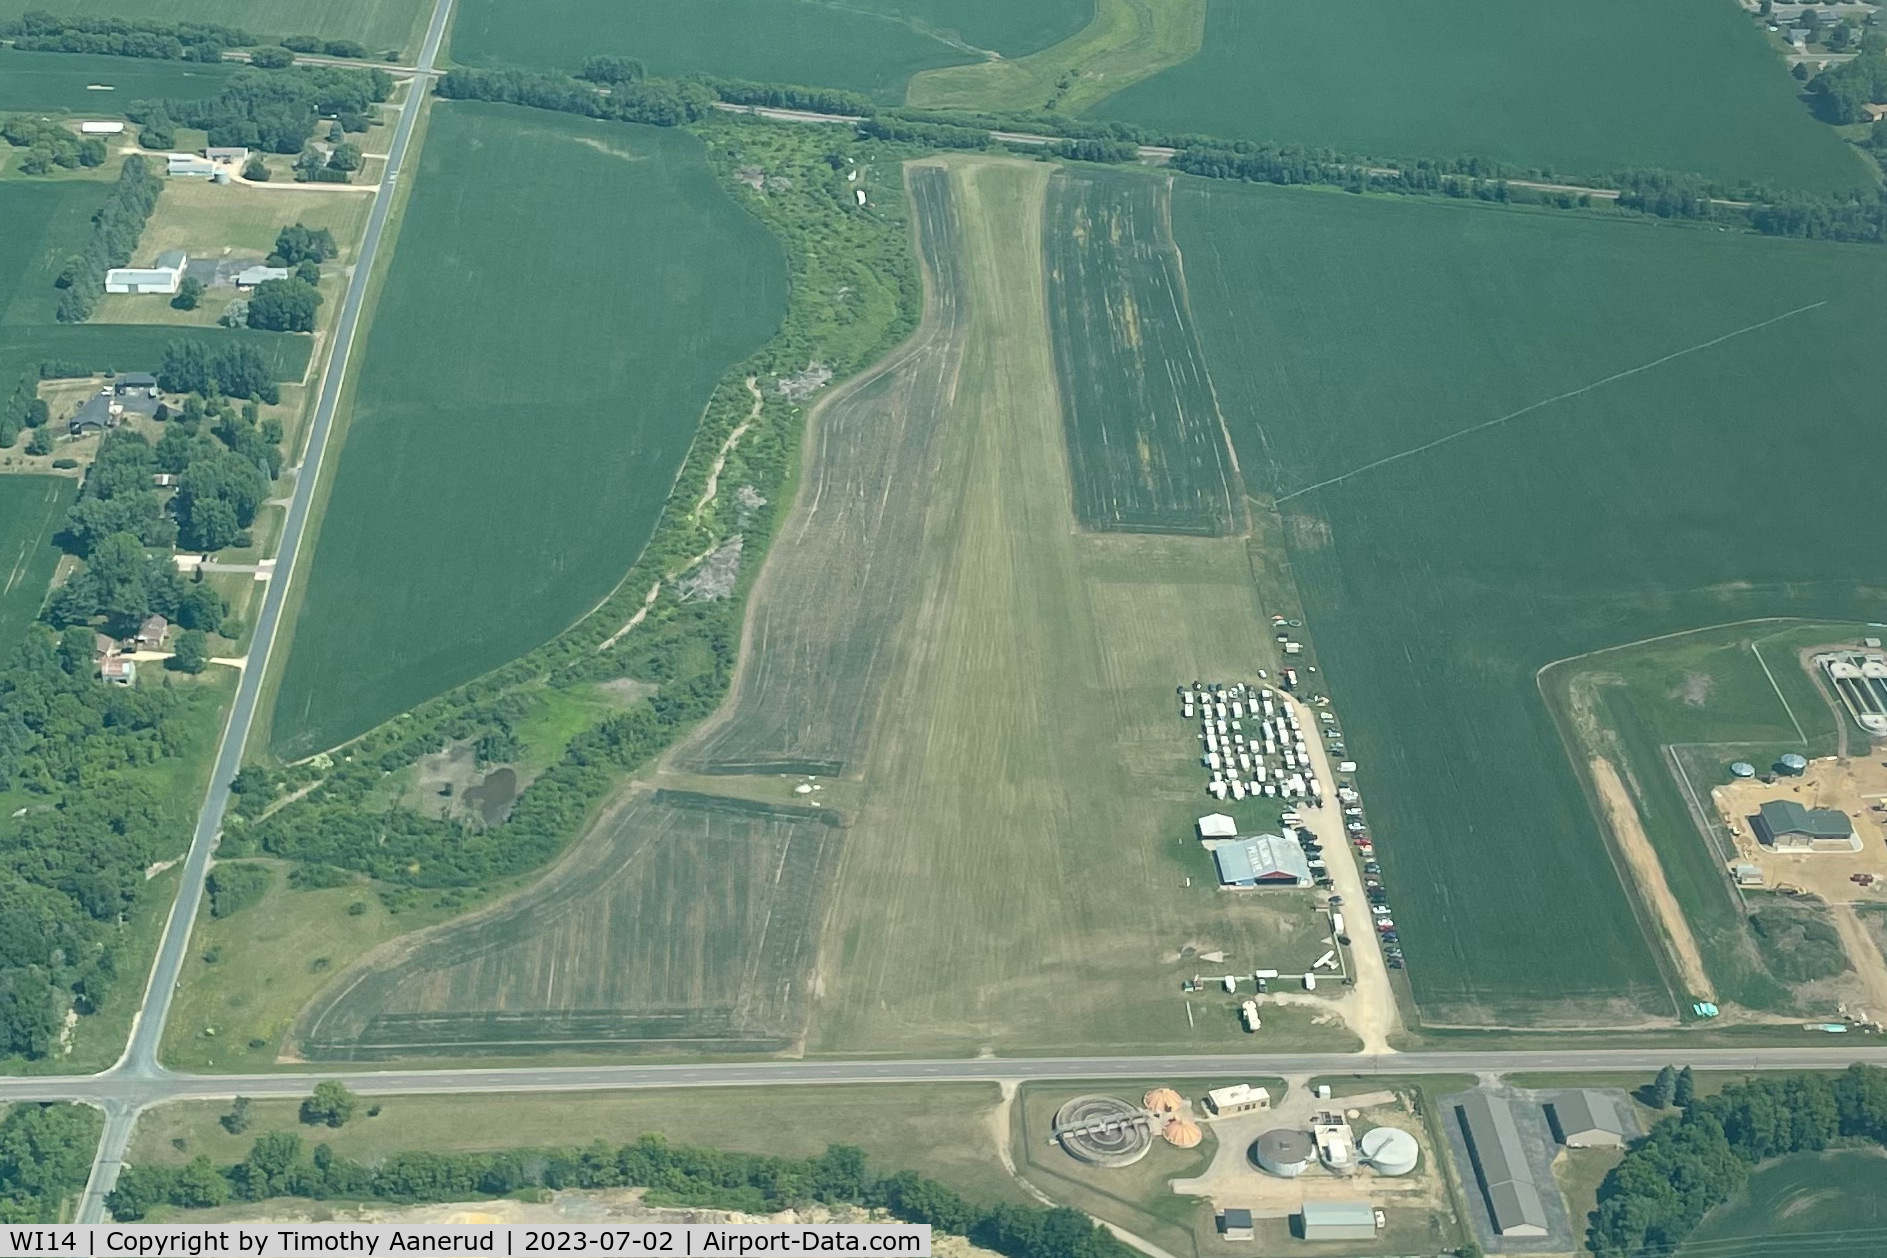 Baldwin Airport (WI14) - Baldwin. Lets go parachute jumping